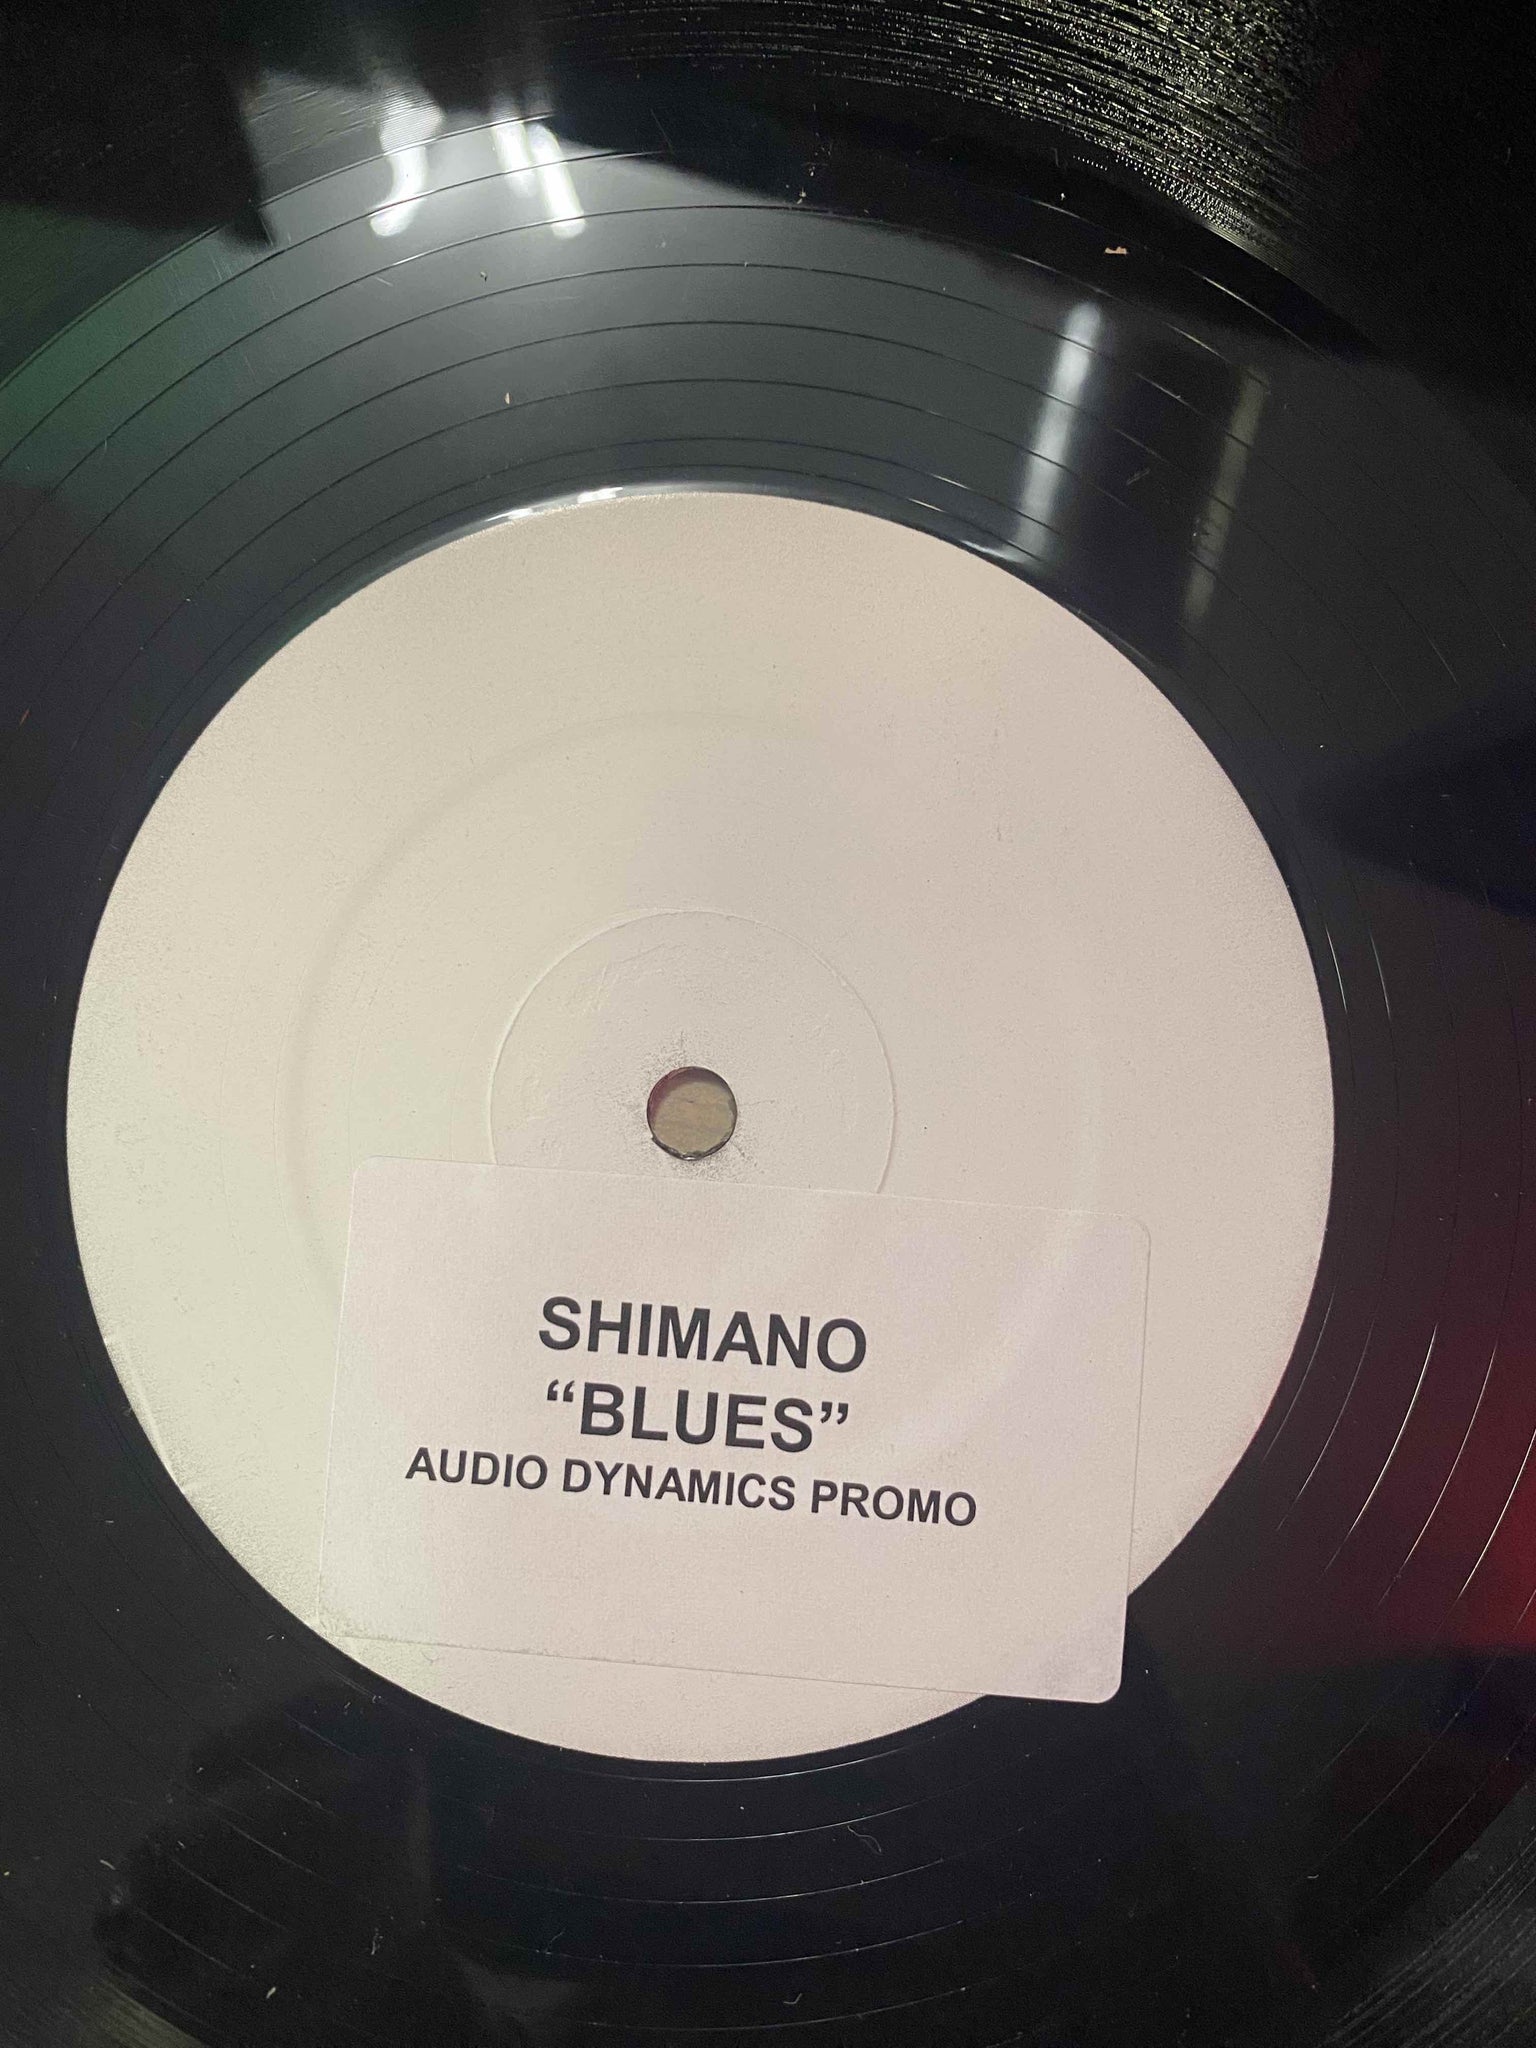 Shimano – Blues - New 12" Single Record 2003 Audio Dynamics UK Vinyl - UK Garage / Breaks